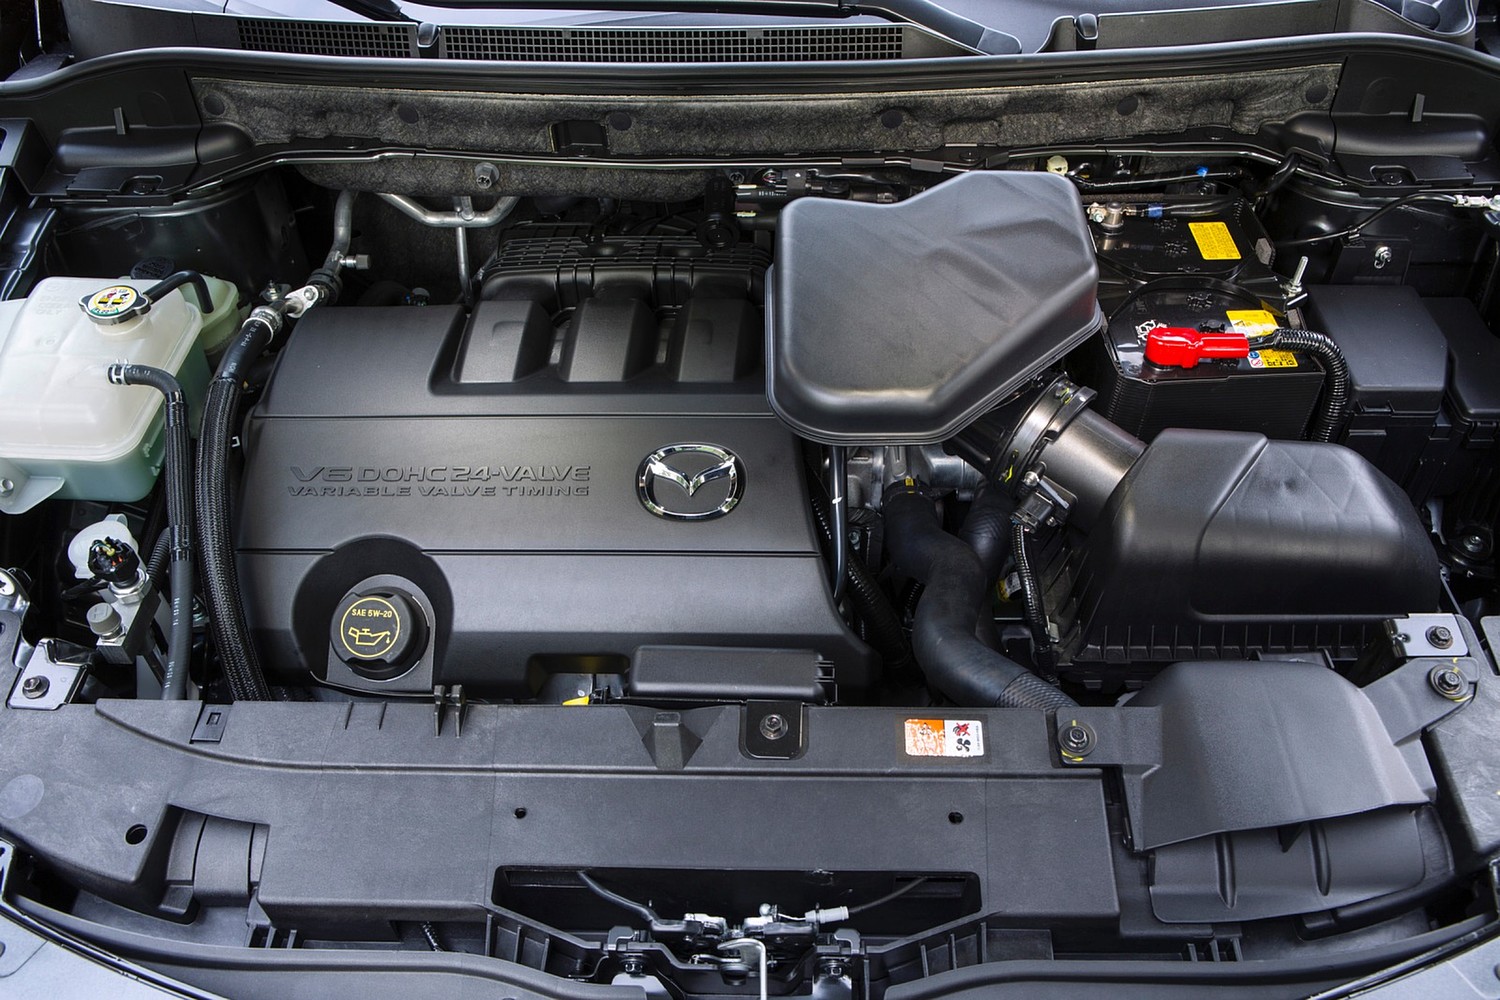 Mazda CX-9 3.7L V6 Engine (2013 model year shown)